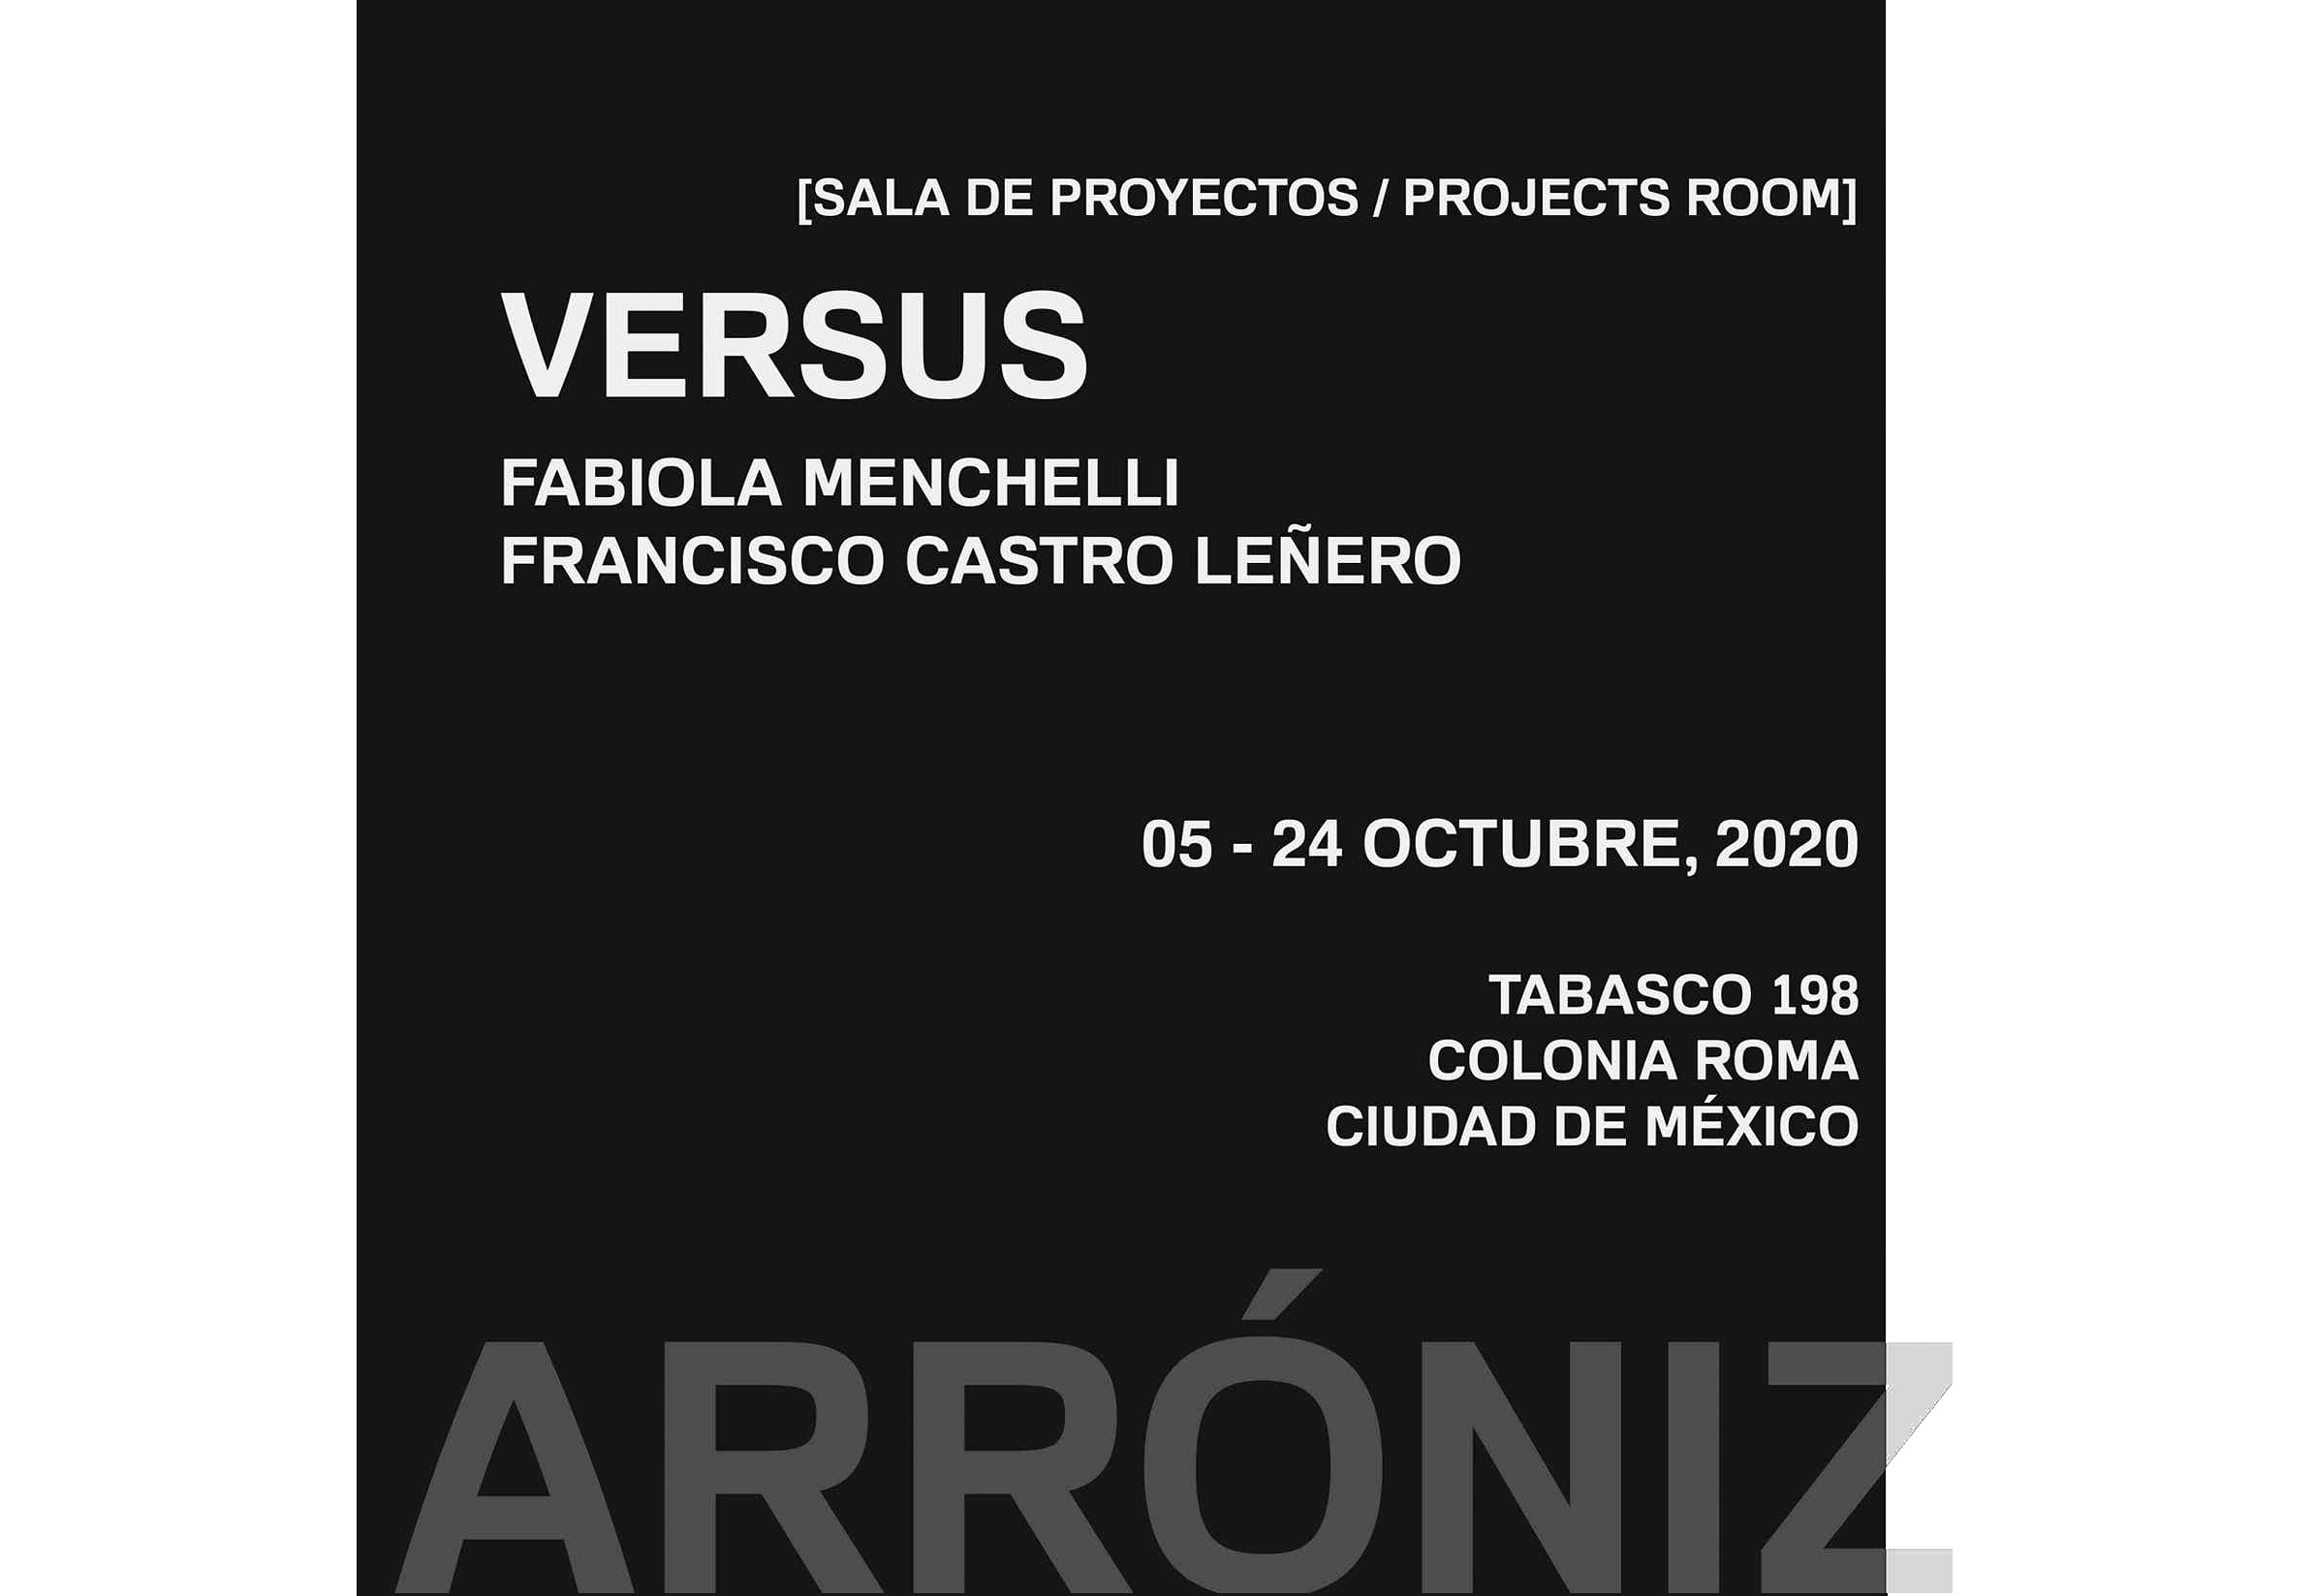 VERSUS: Fabiola Menchelli VS. Francisco Castro Leñero, Arroniz Arte Contemporáneo, Mexico City. 5 - 24 de Octubre 2020.